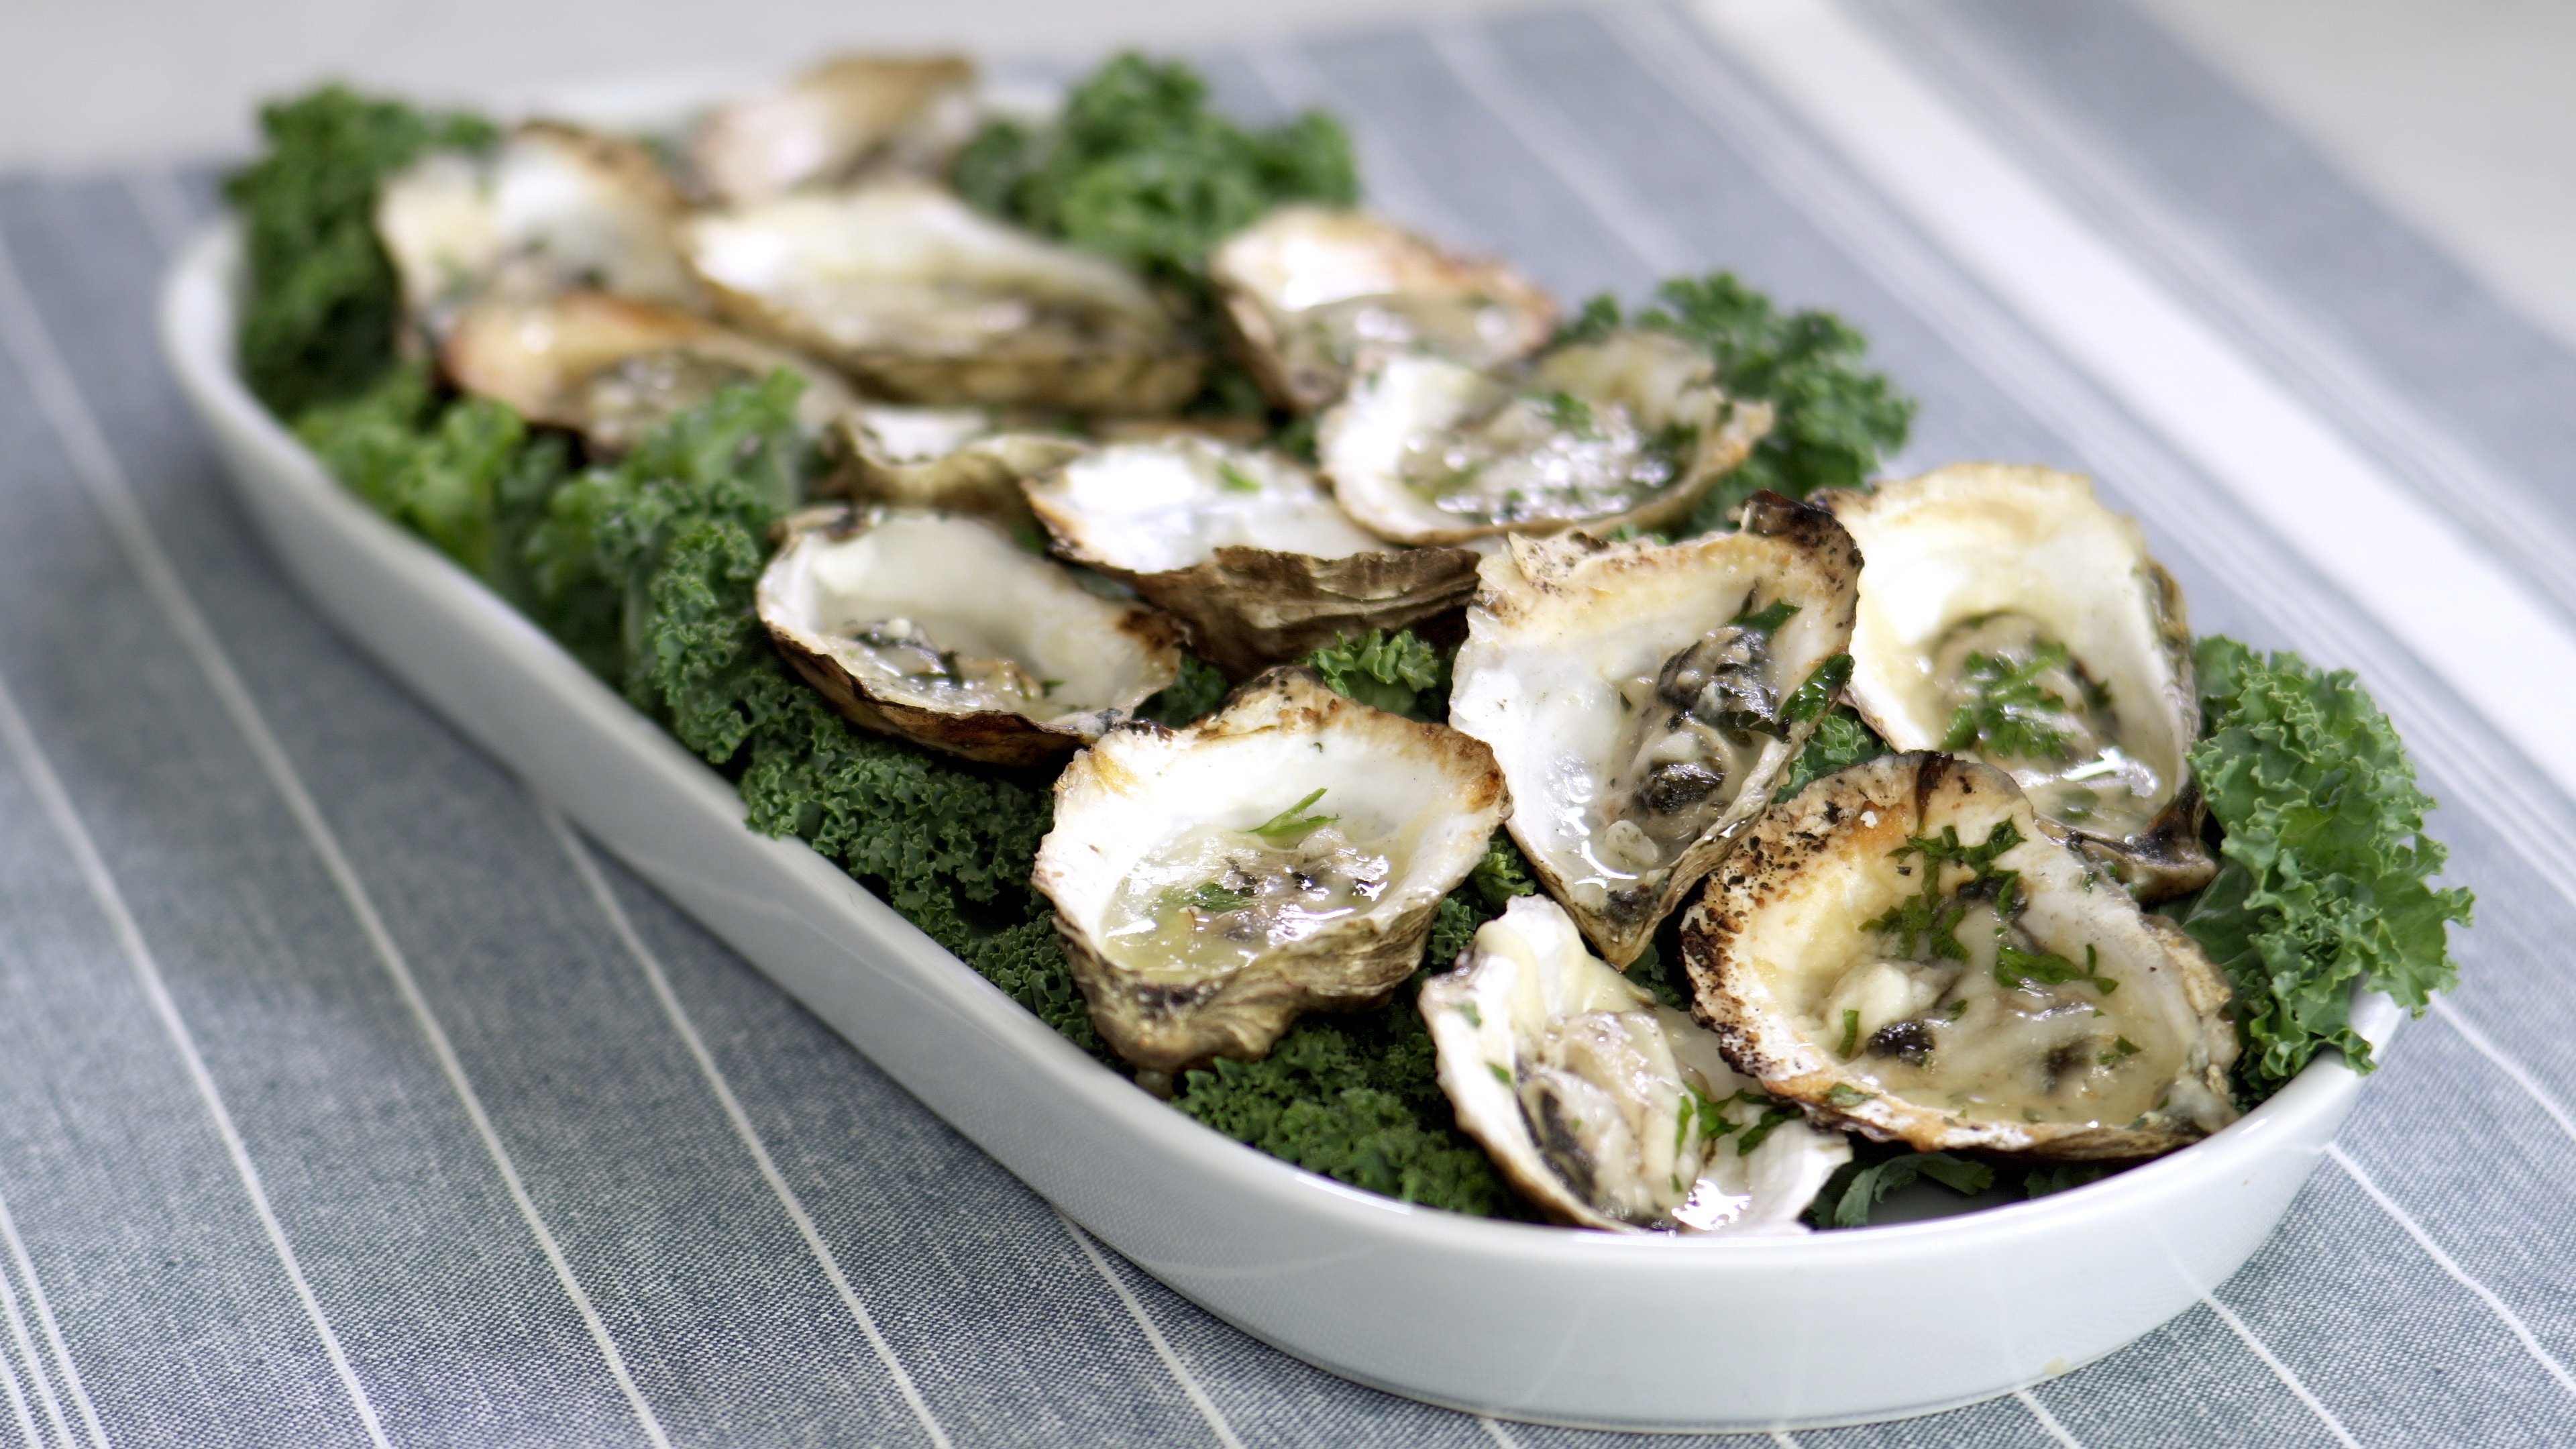 https://www.cuisinart.com/globalassets/recipes/oysters-hero.jpg